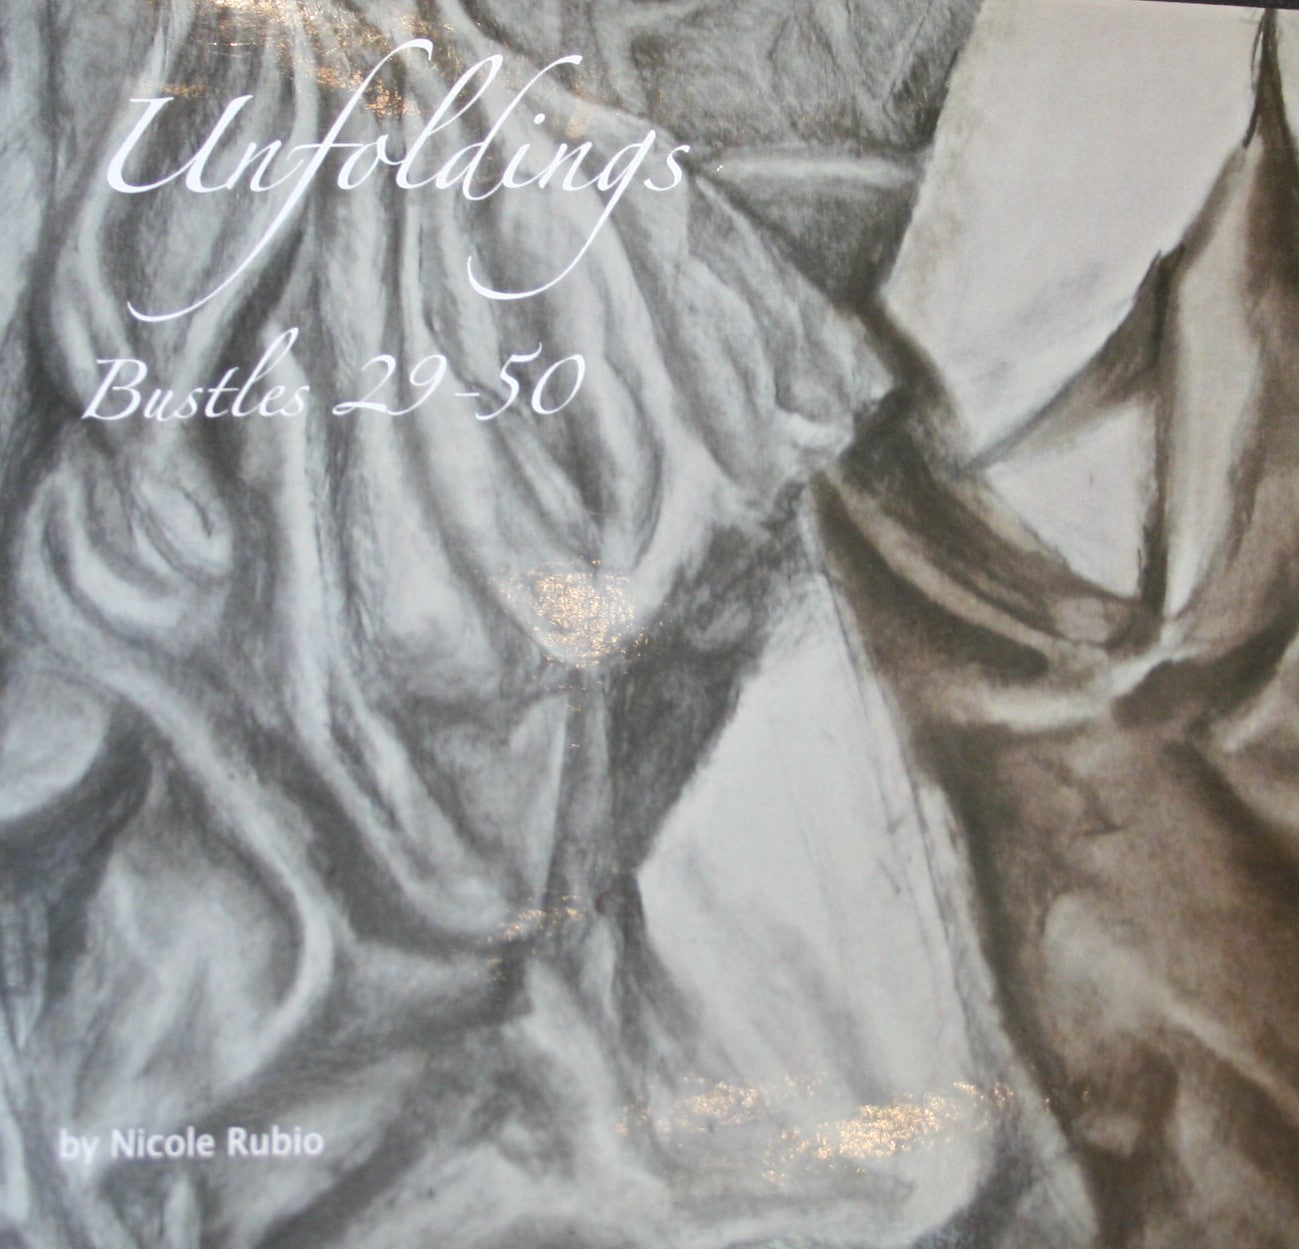 Unfoldings: Bustles 29-50, book